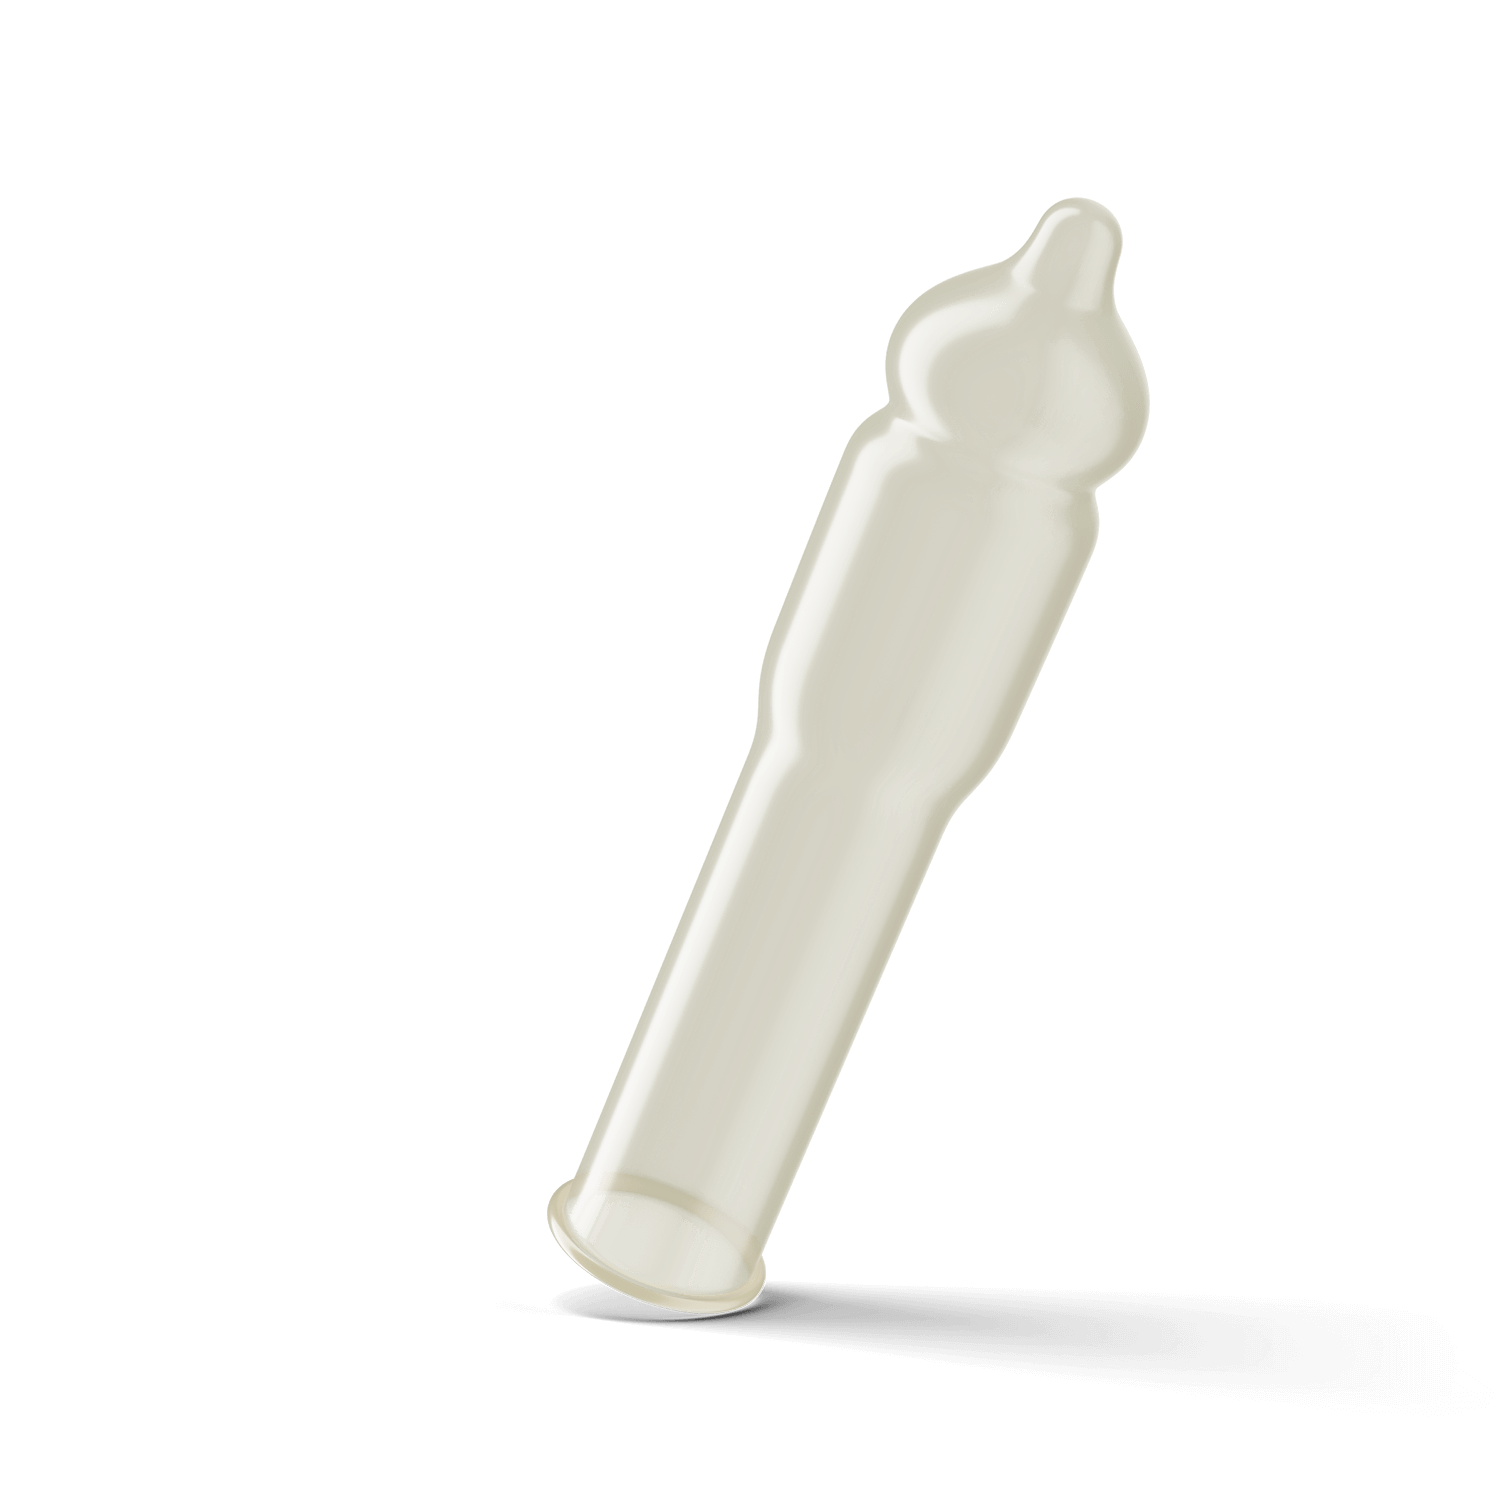 Trojan Ultra Fit Sensitive Tip Feel Condom bulbous shape.